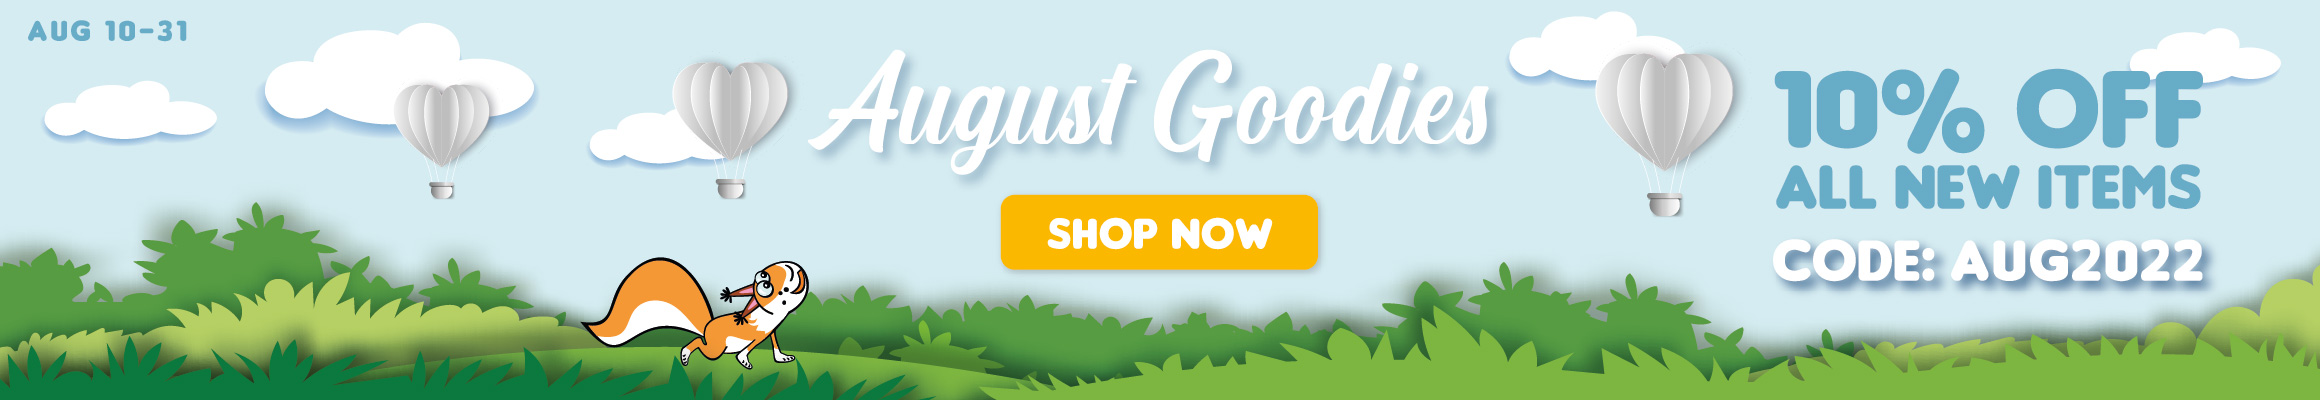 august-goodies-promo-web-3